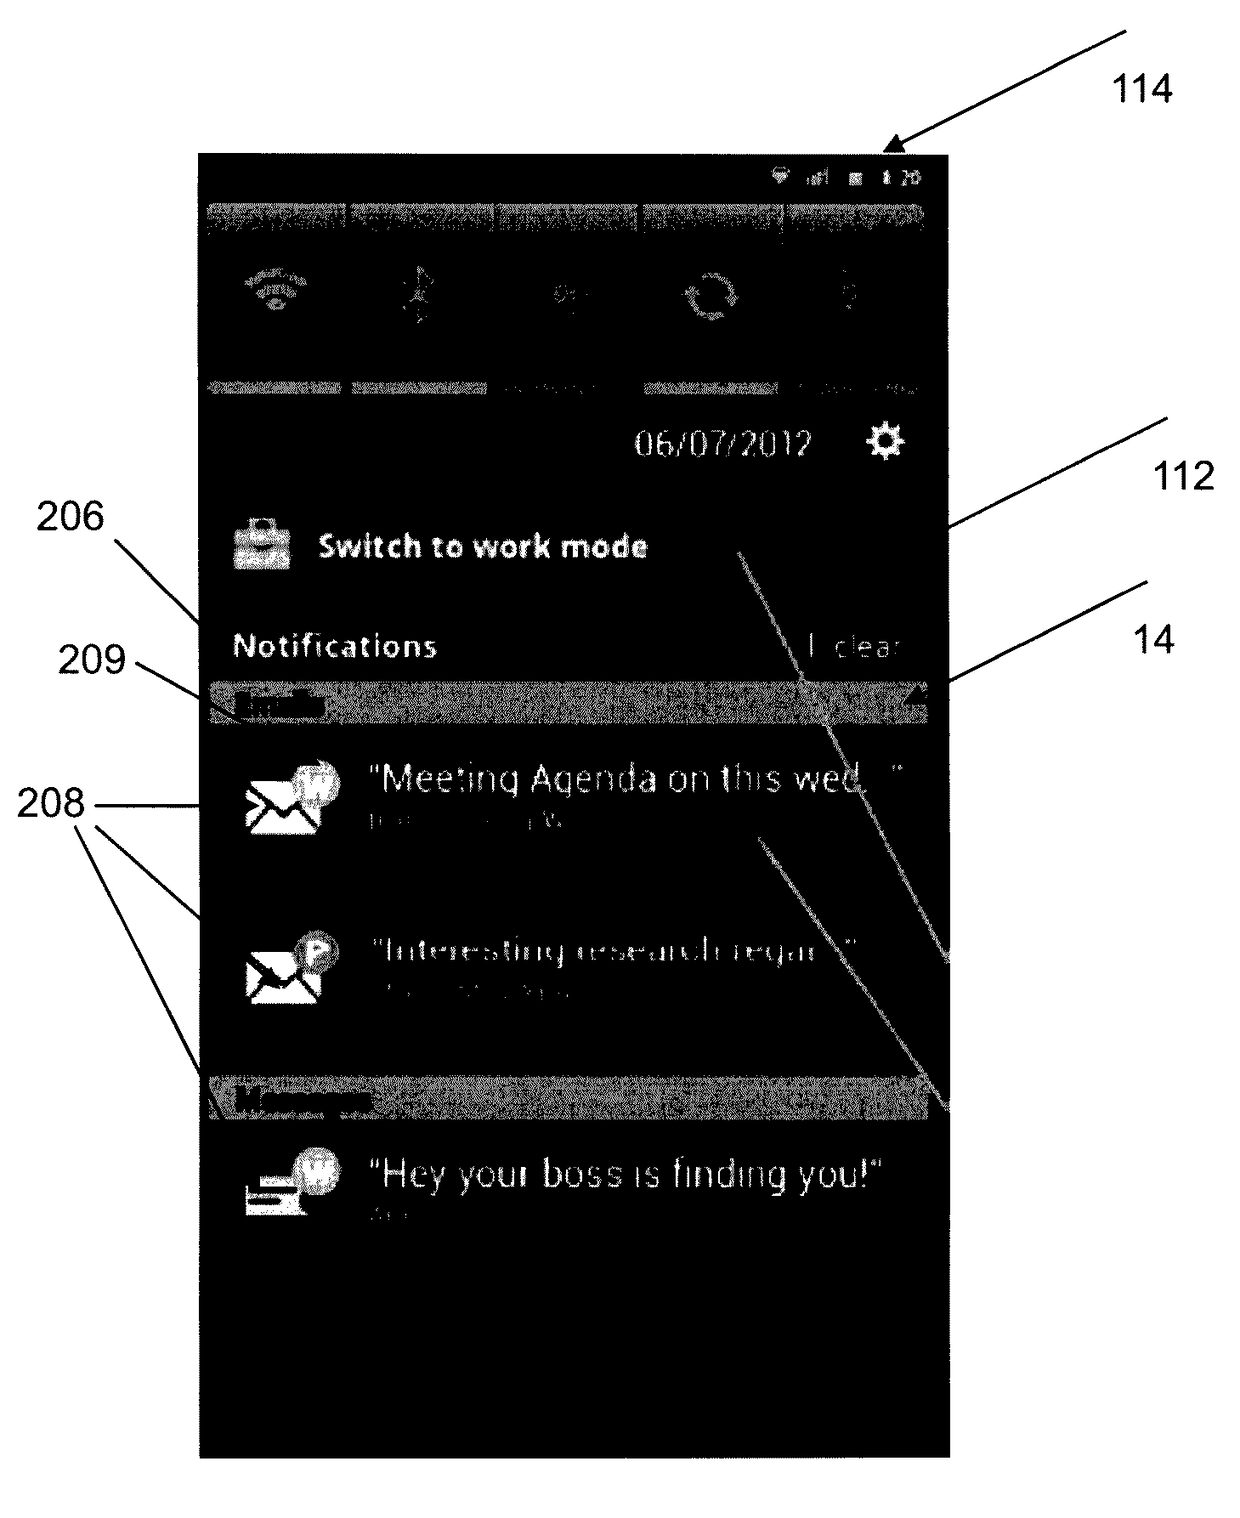 Multi-profile mobile device interface for same user